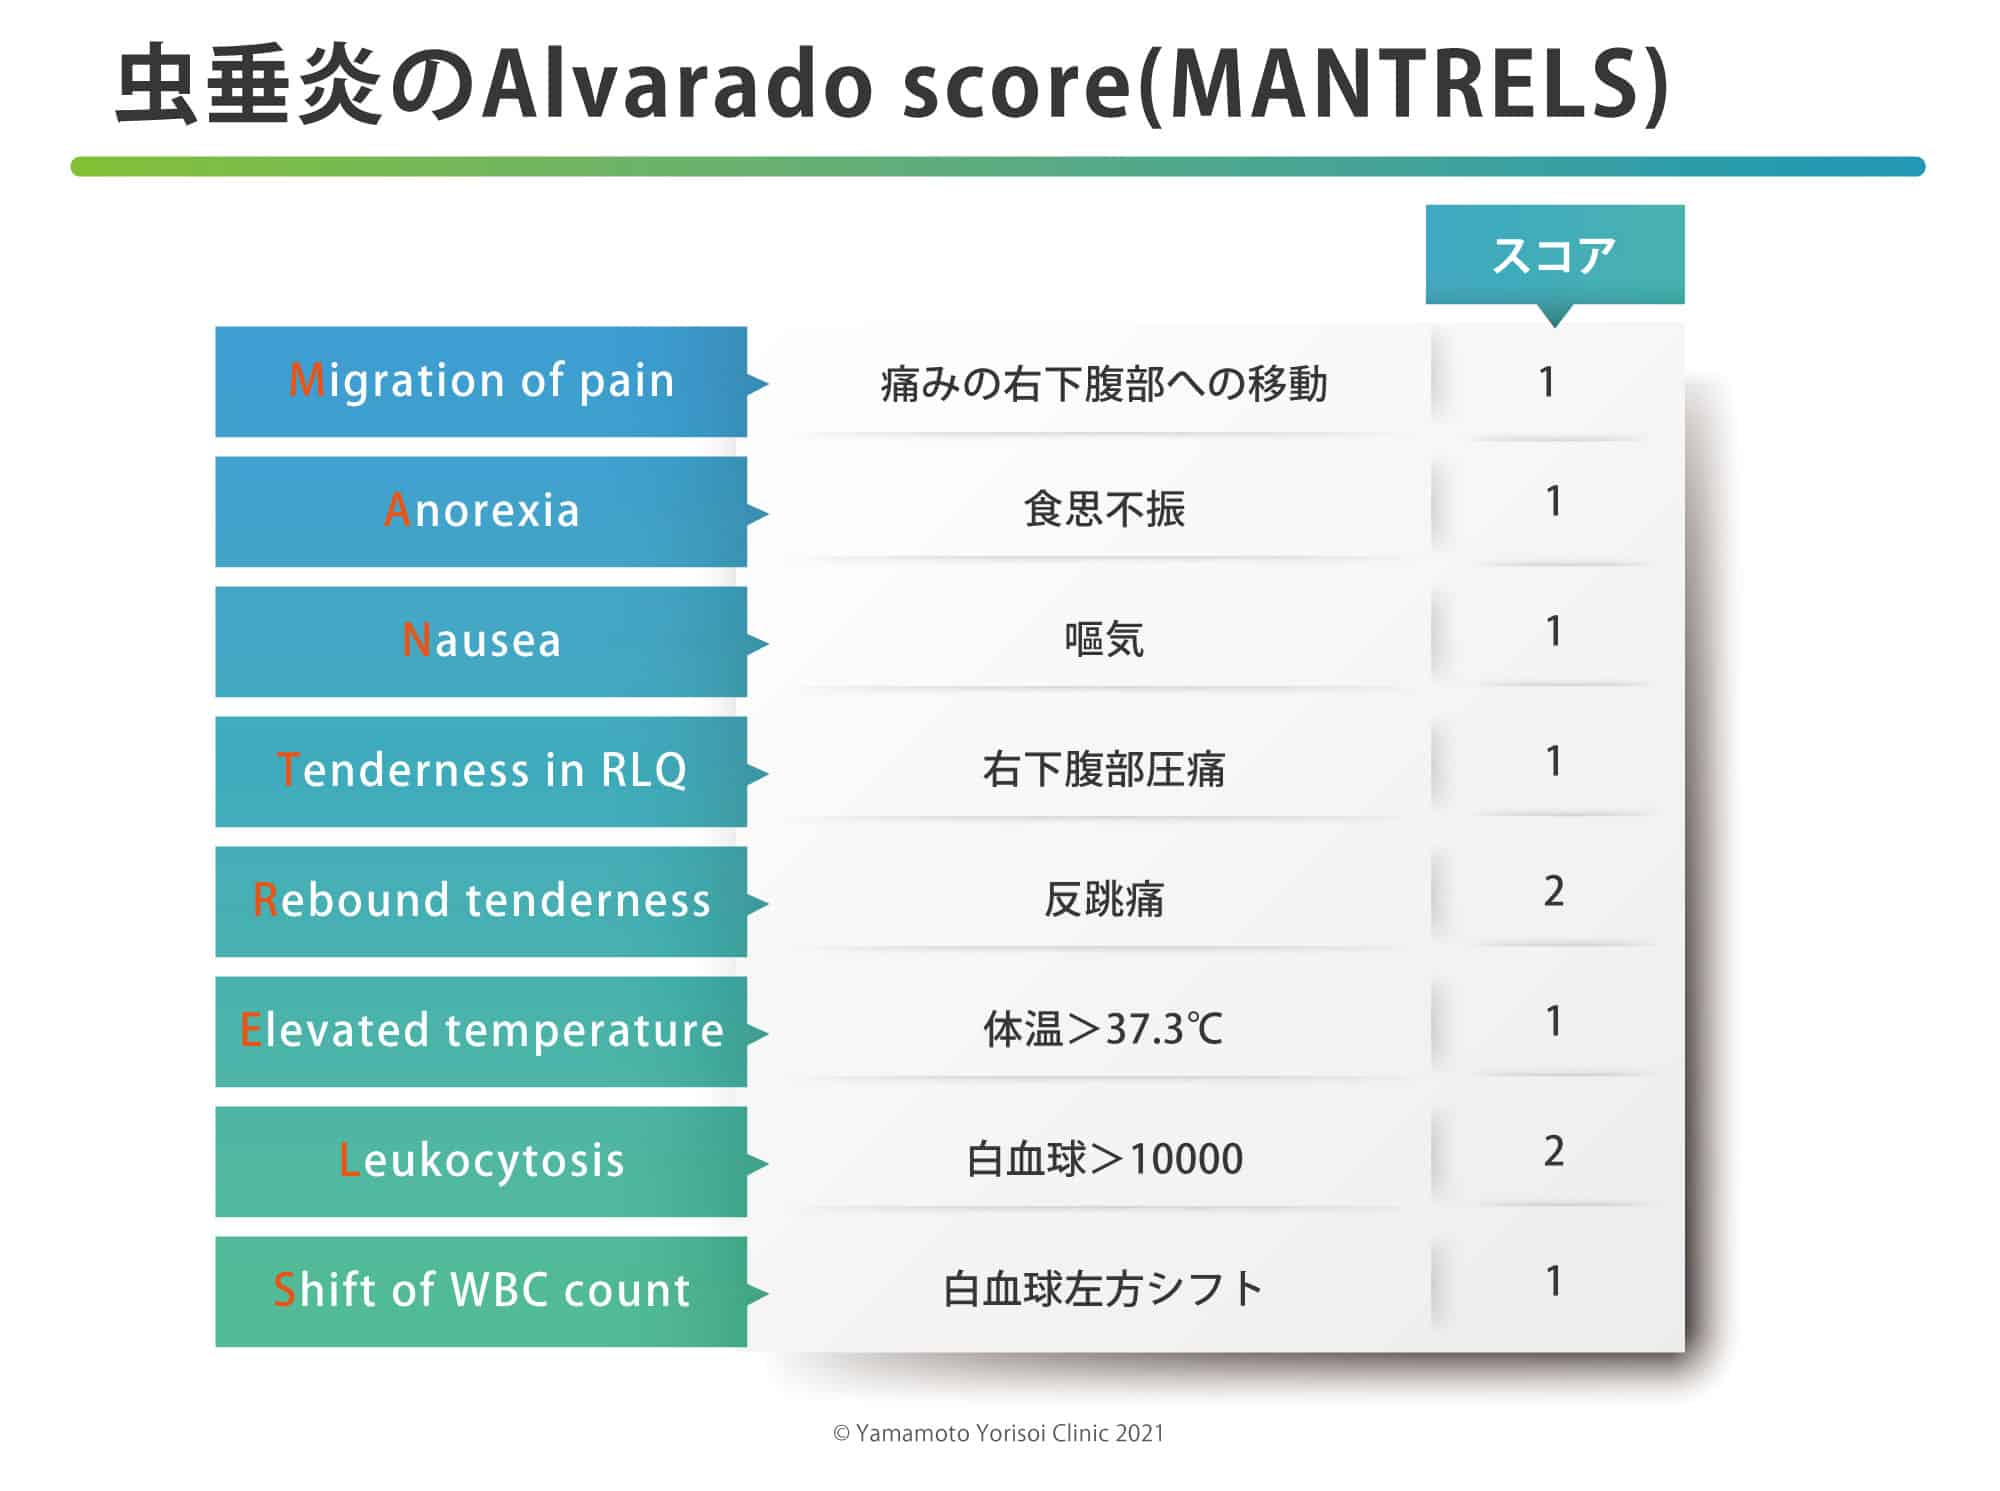 MANTRELS score